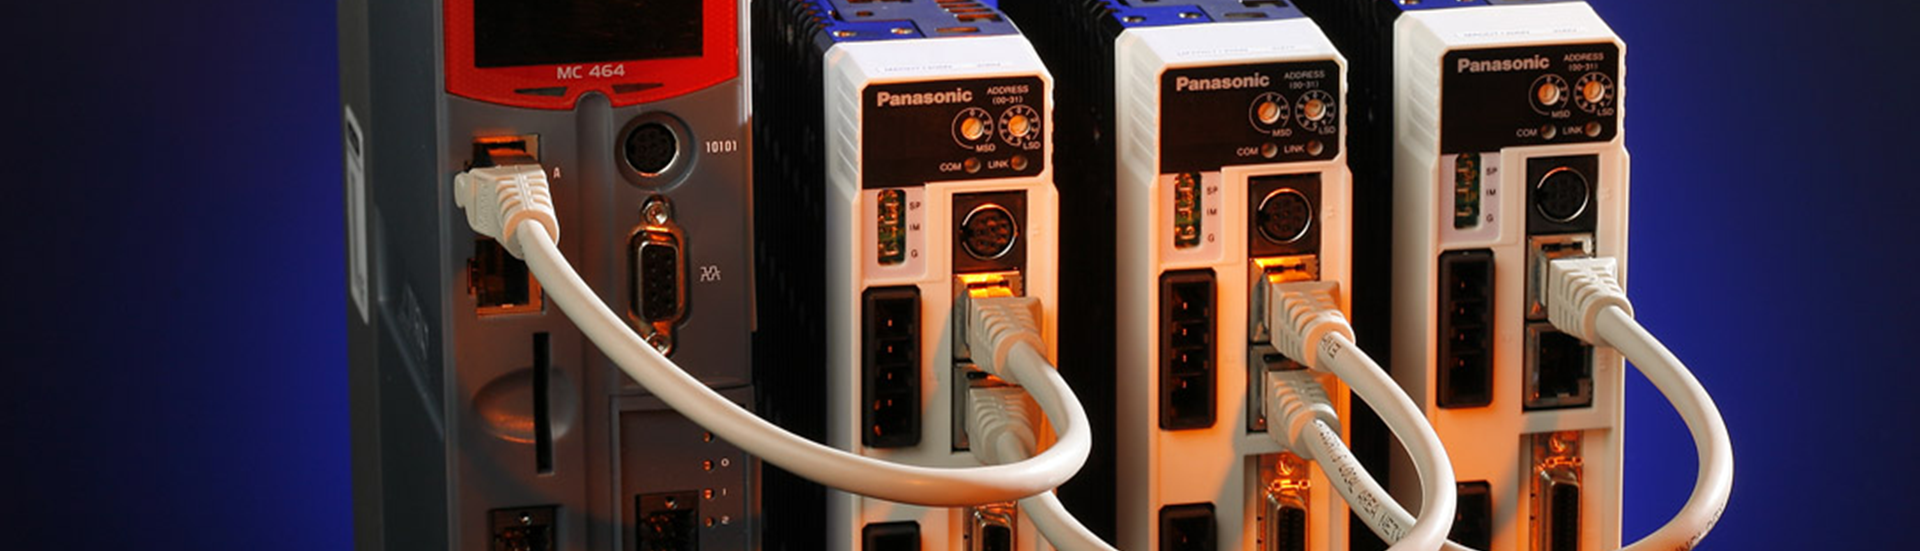 Topbillede med Trio MC464 controller og tre Panasonic controllere